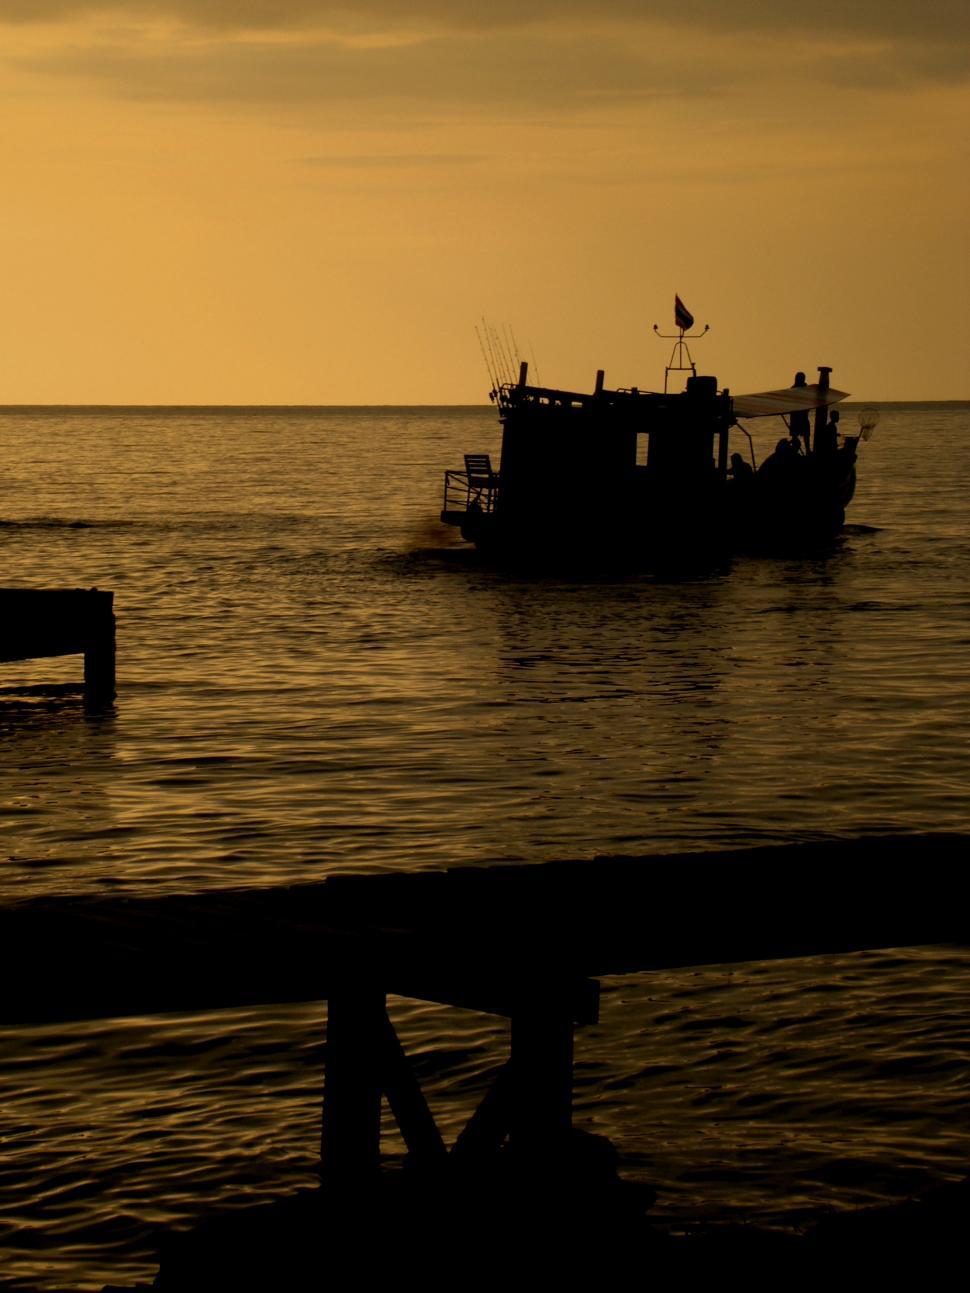 Free Image of Fishing Boat on Golden Sunset 